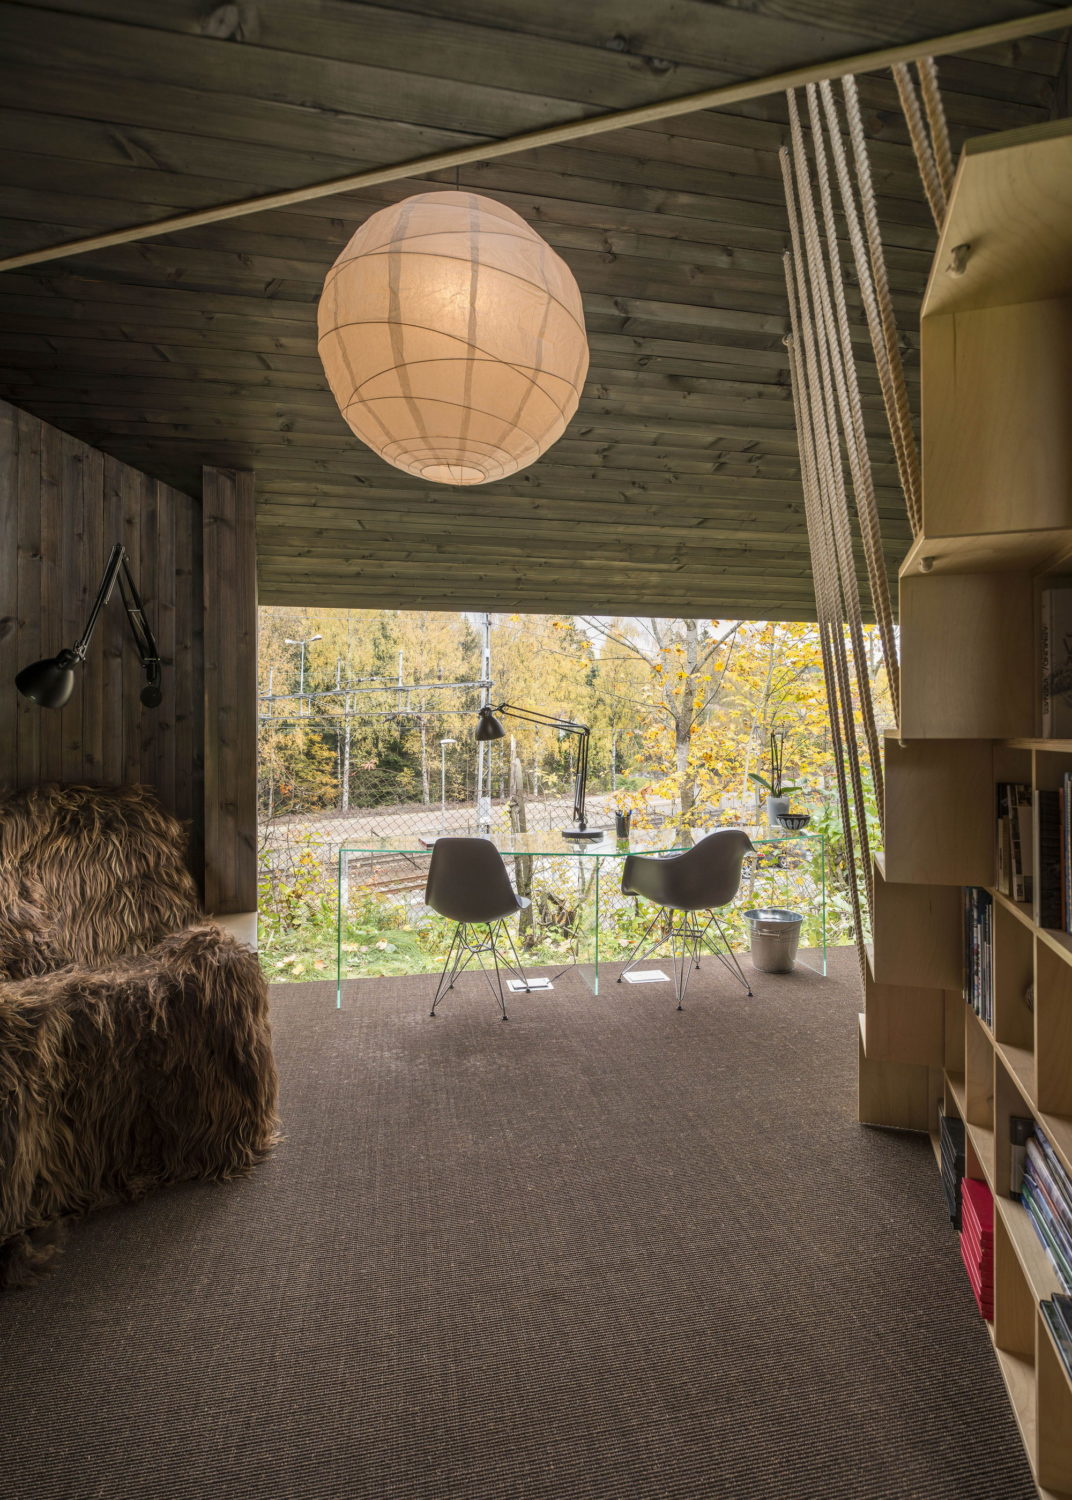 Writers' Cottage by Jarmund/Vigsnæs Architects